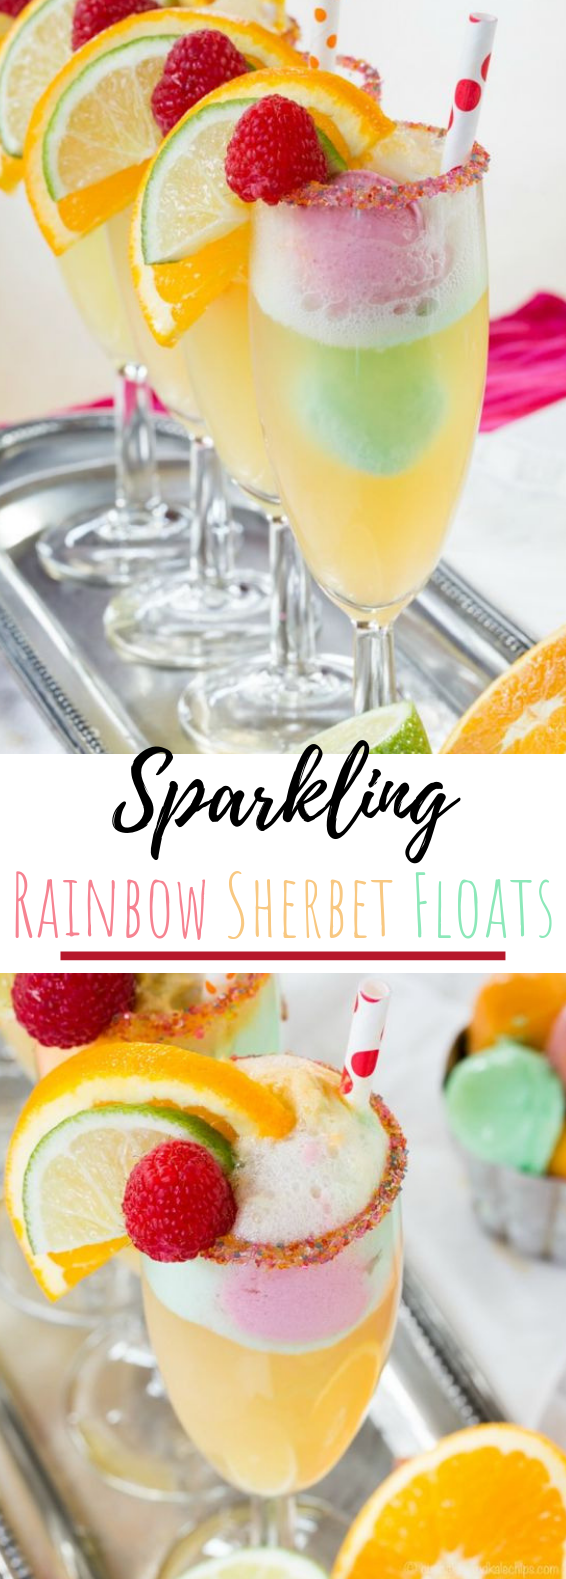 Sparkling Cider Rainbow Sherbet Floats #drinks #nonalcohol